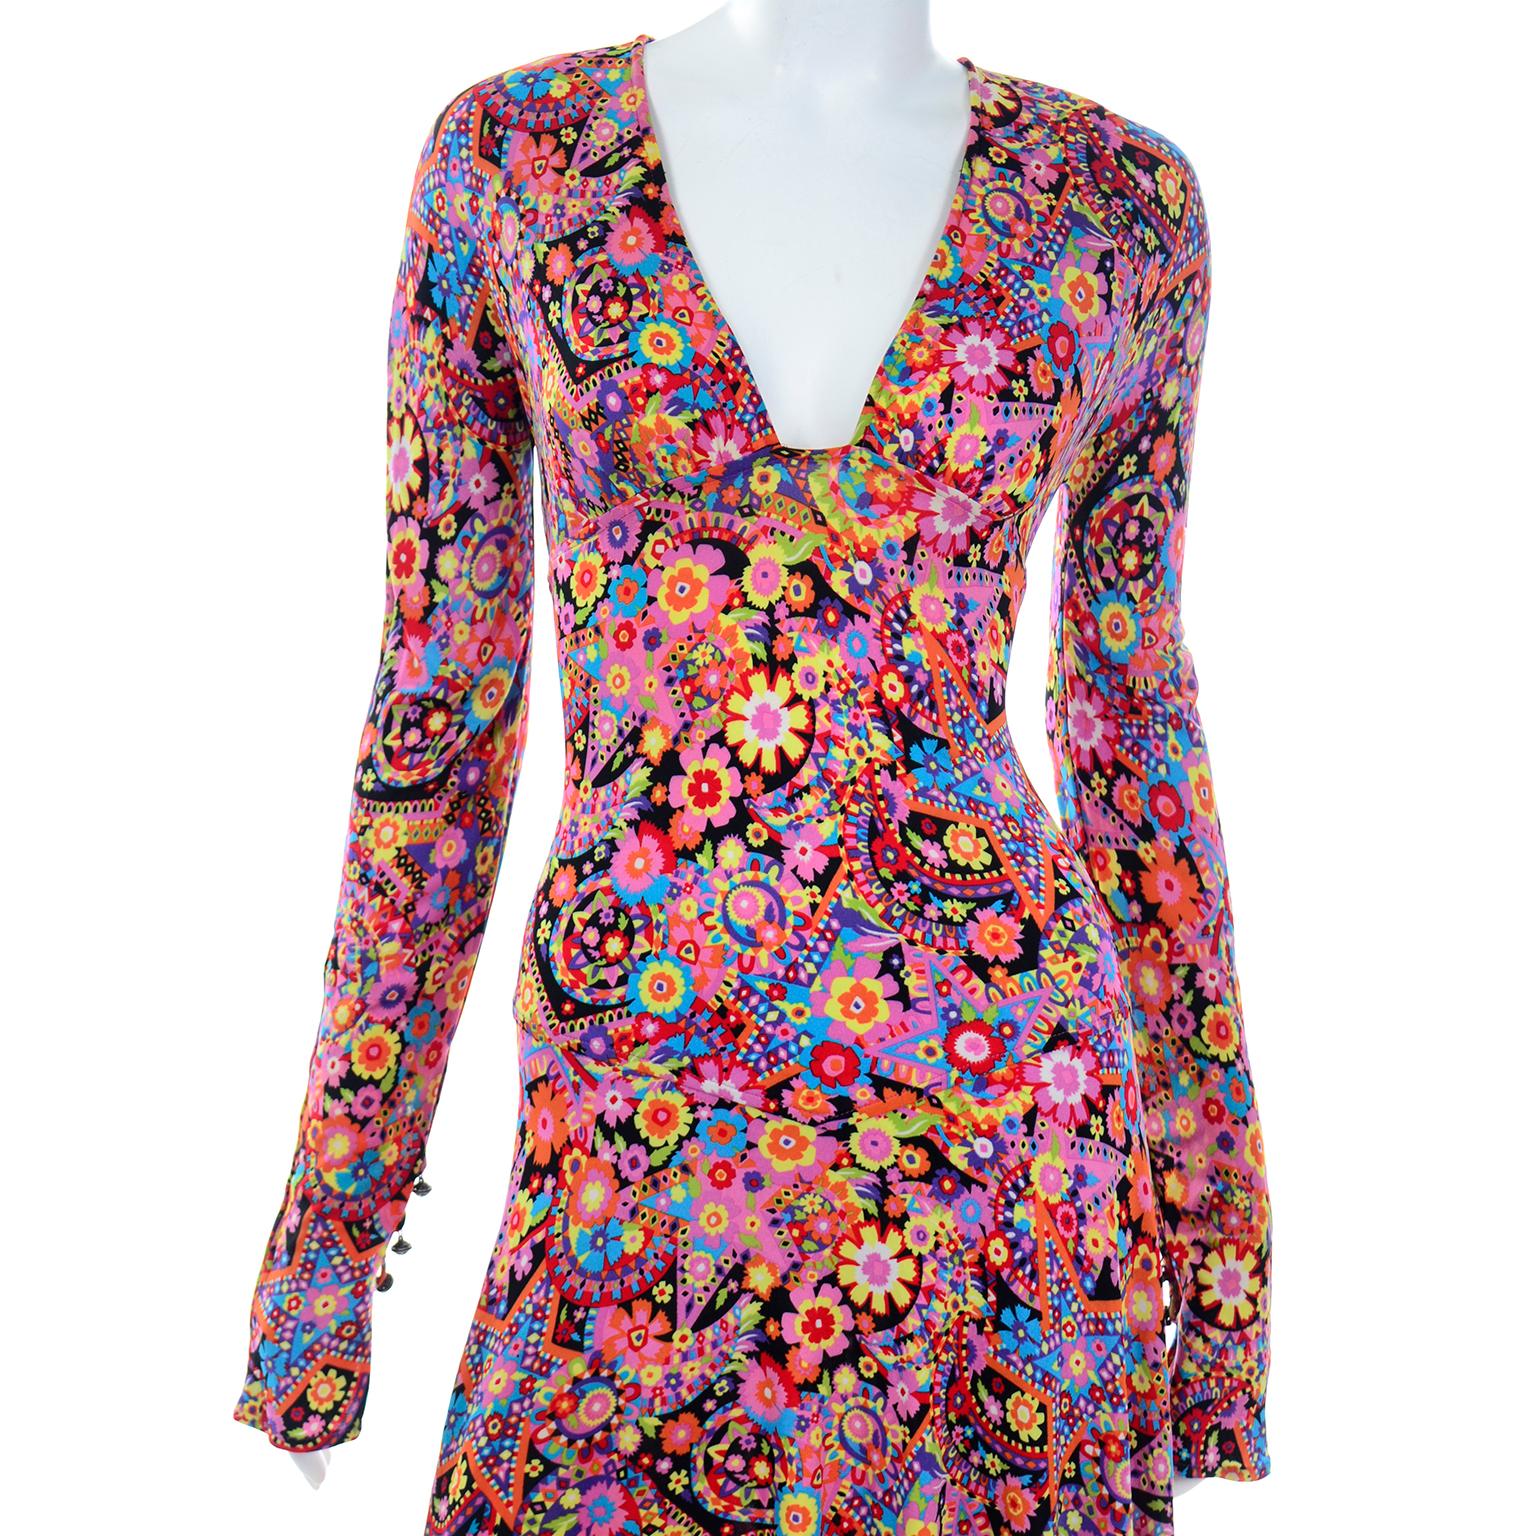 Gianni Versace Fall 2002 Vintage Pop Flower Power Stretch Jersey Dress 2